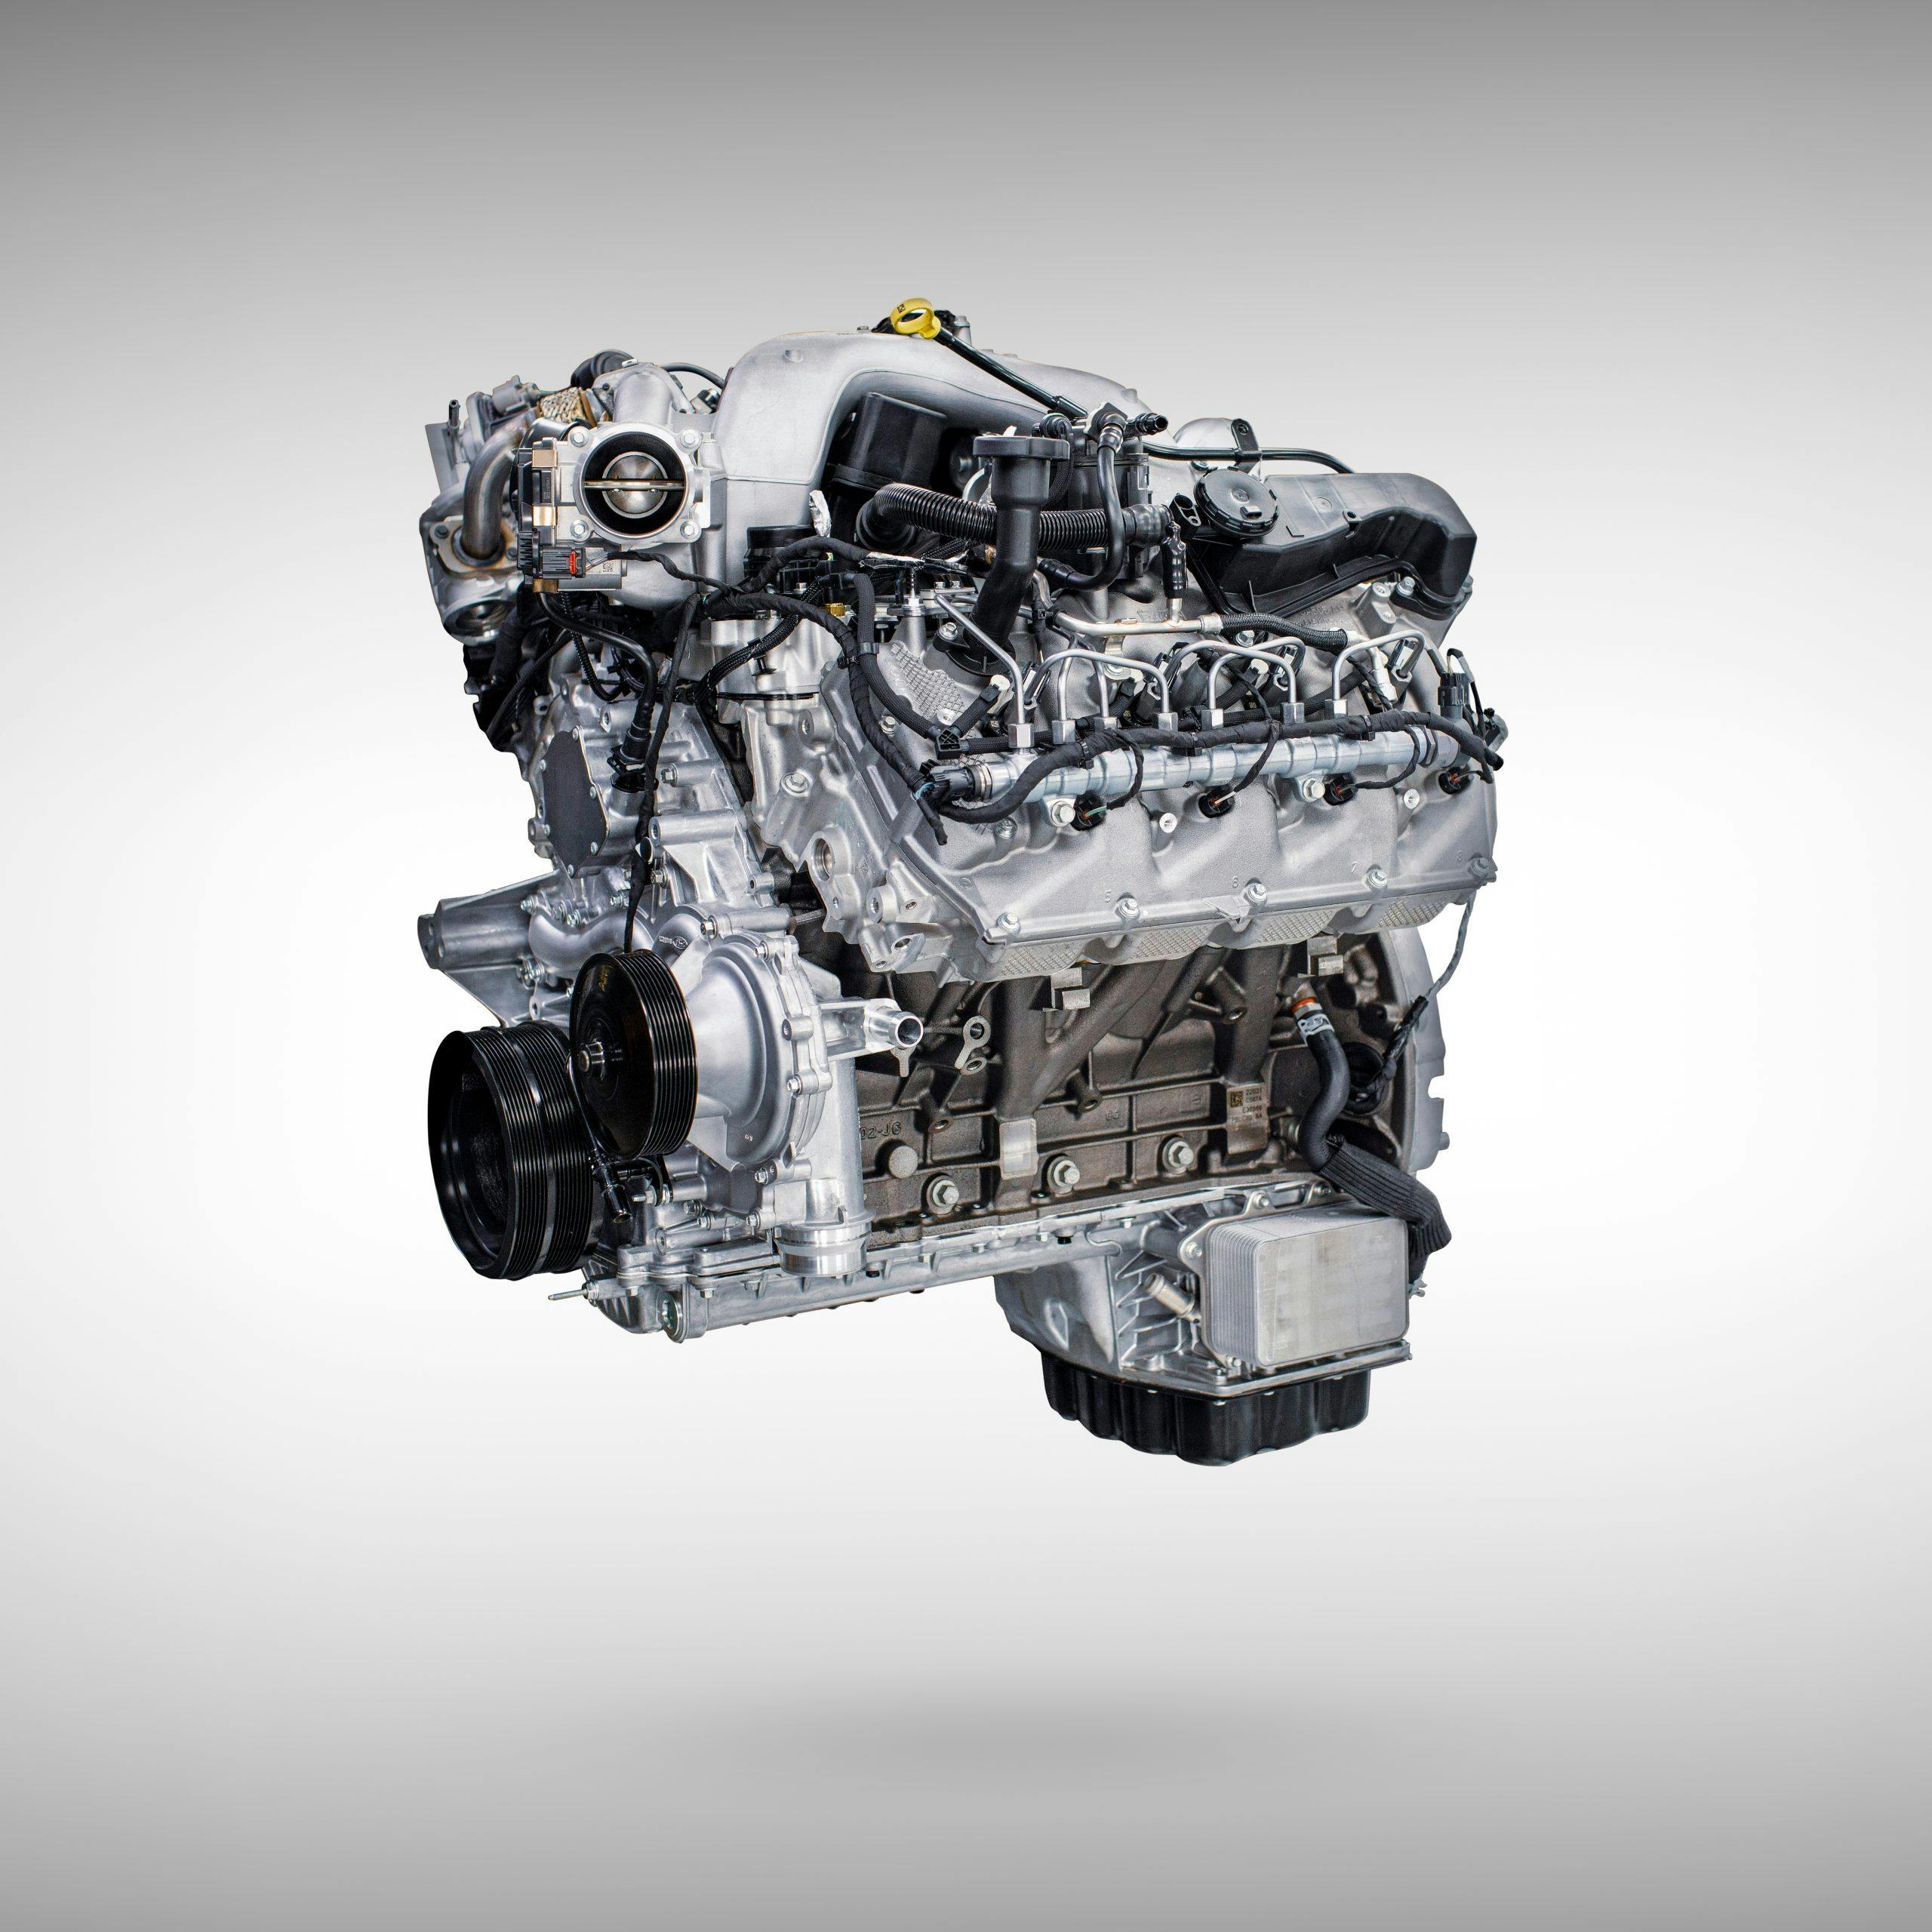 Ford super duty High-Output 6.7-liter Power Stroke V8 engine